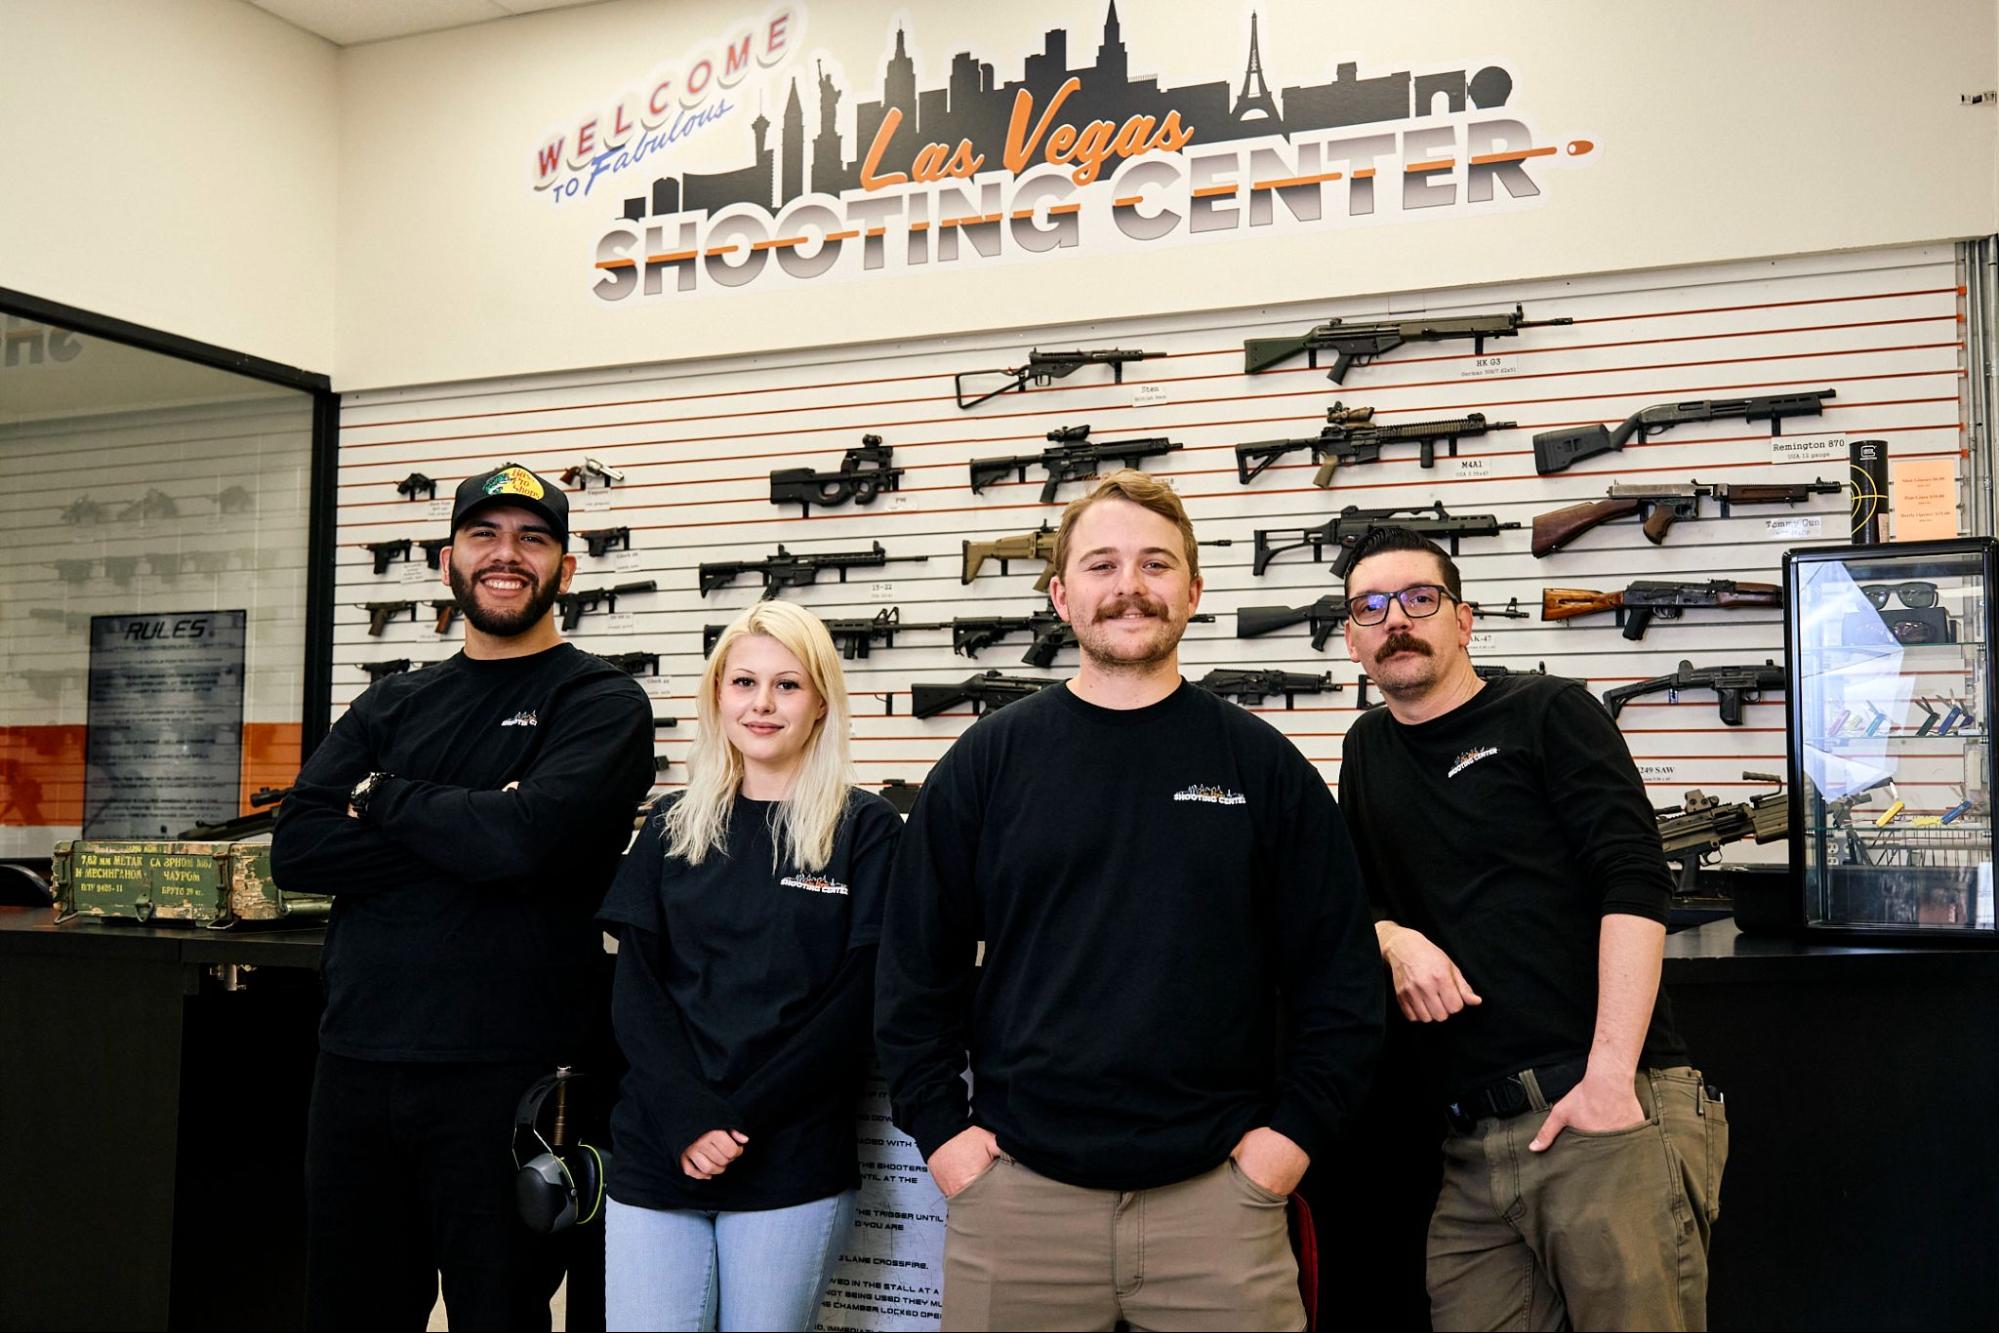 Las Vegas Shooting Center: An Extremely Diverse Gun Store